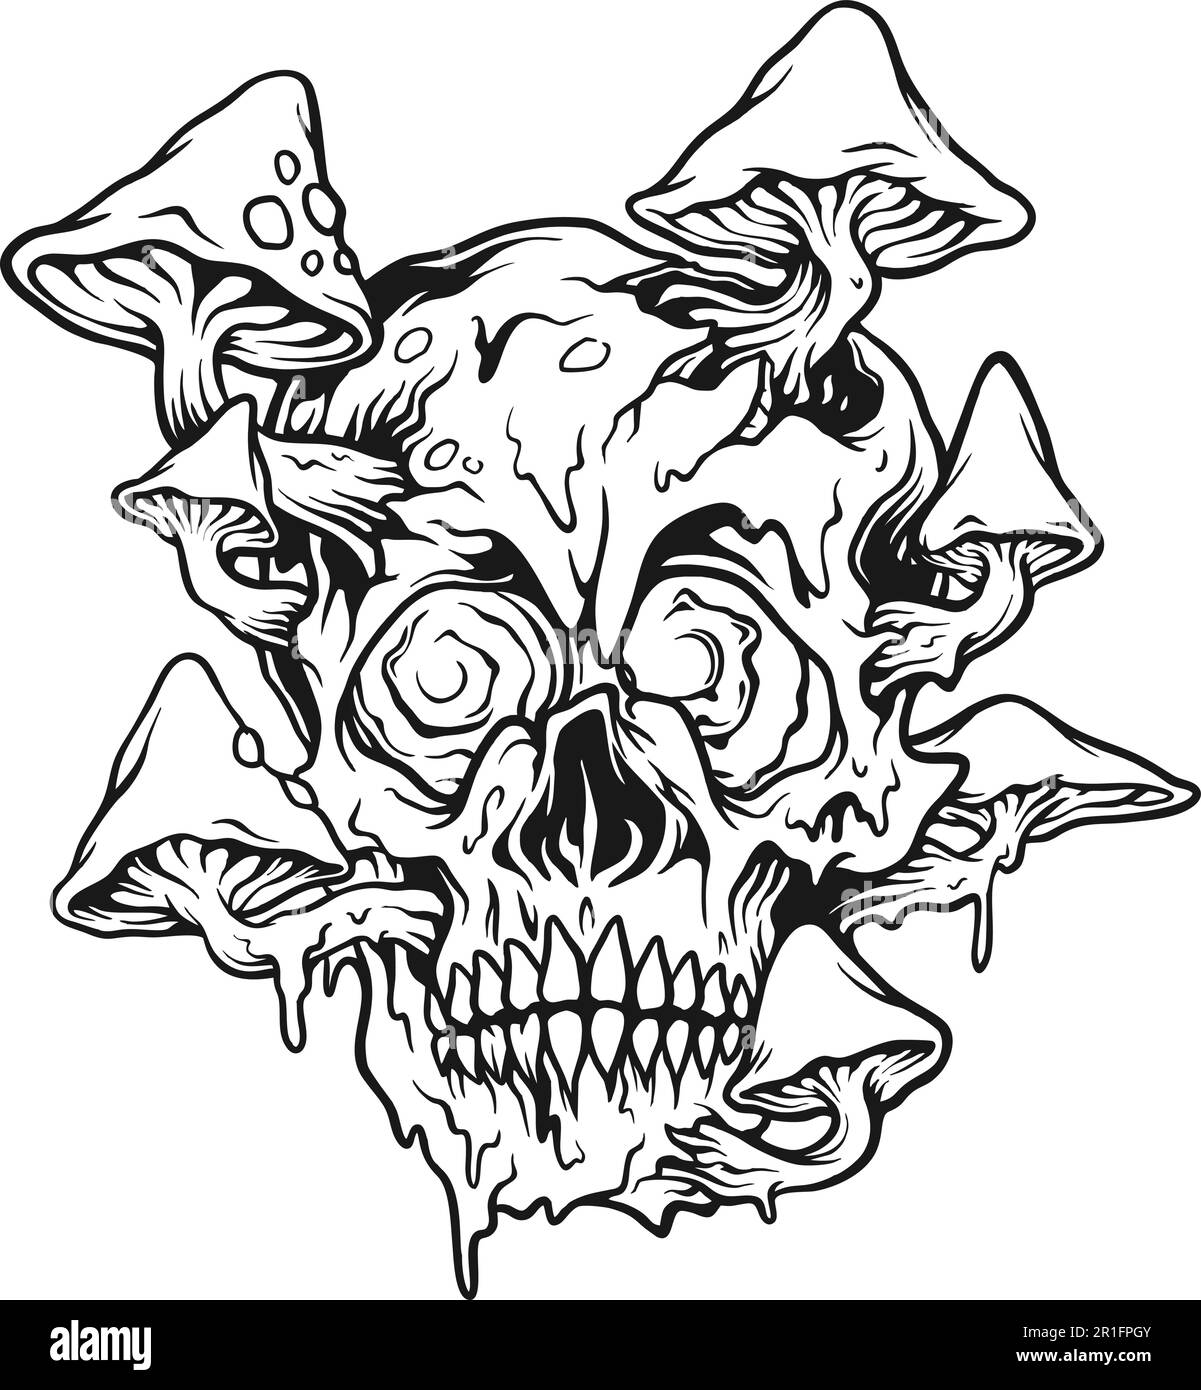 Psychedelic trippy mushrooms zombie monster skull head logo illustrations monochrome vector illustrations for your work logo, merchandise t-shirt, sti Stock Vector